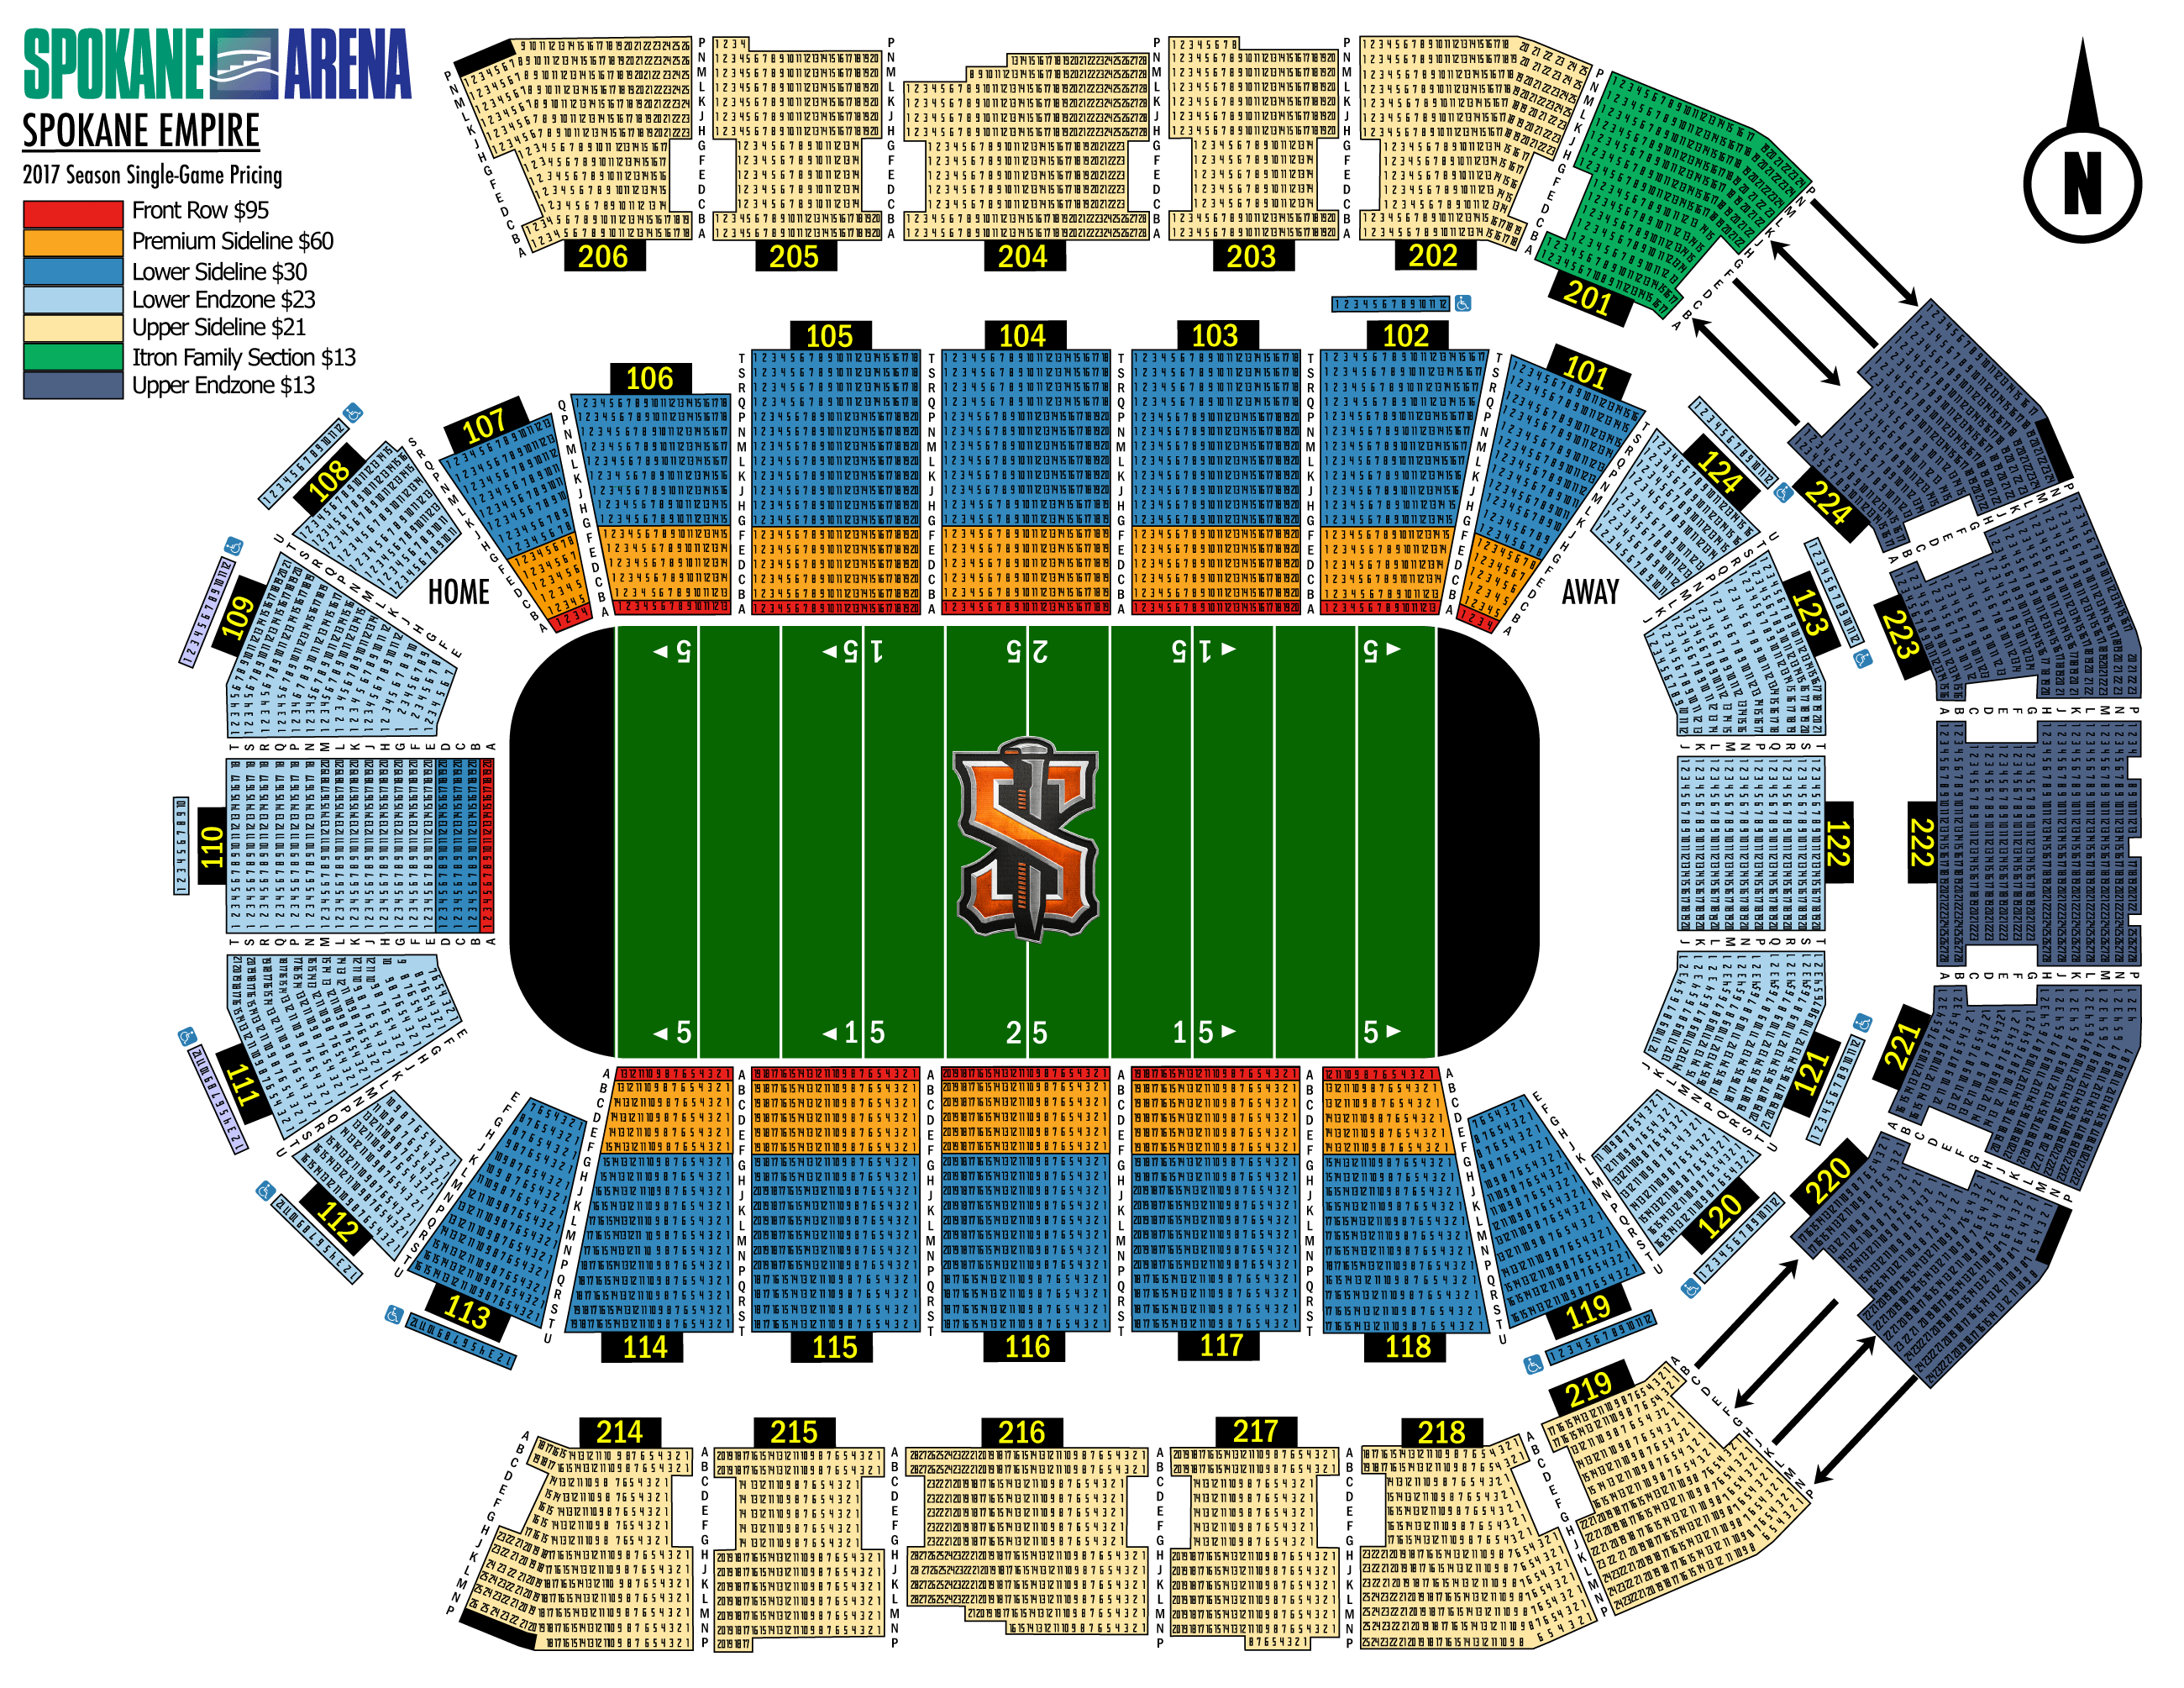 Spokane Arena Seating Map 7834